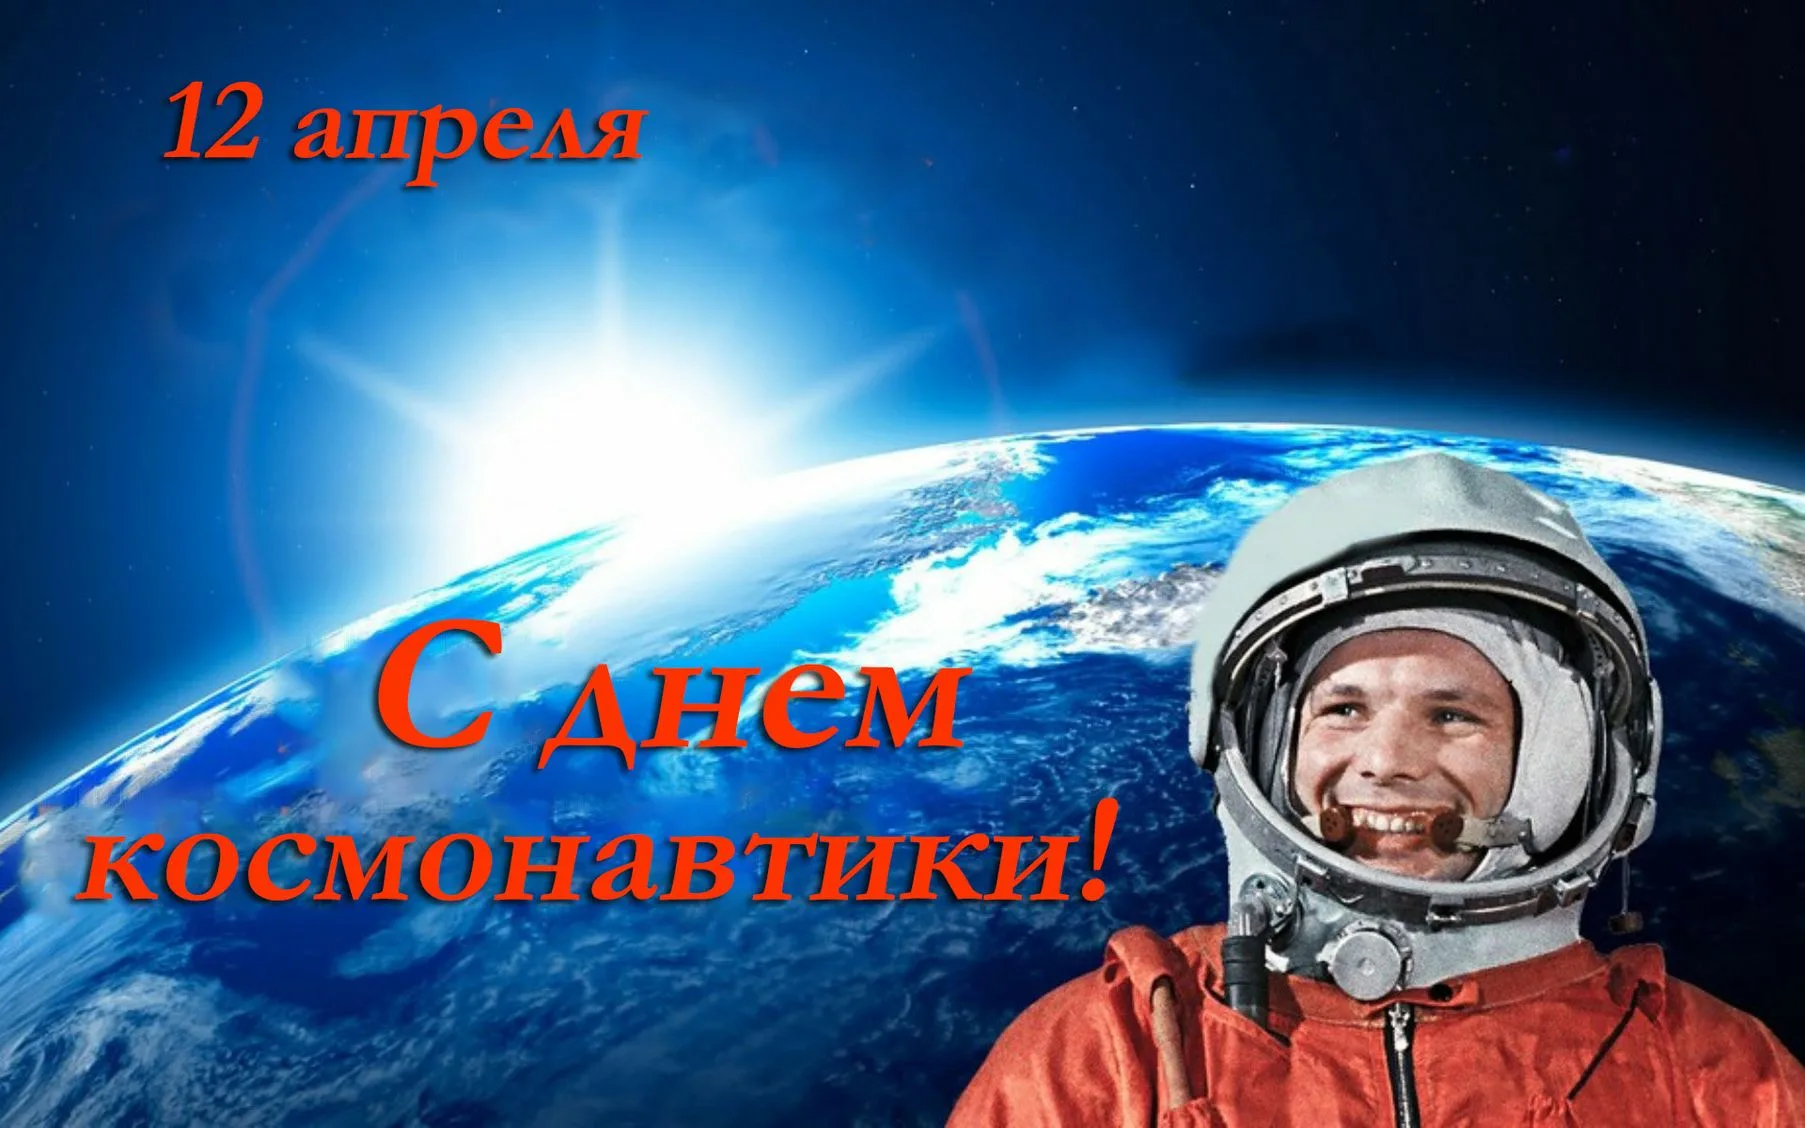 4 апреля день космонавтики. 12 Апреля день космонавтики. День Космонавта. 12 - Апрель день косонавтики. День космонавтики картинки.